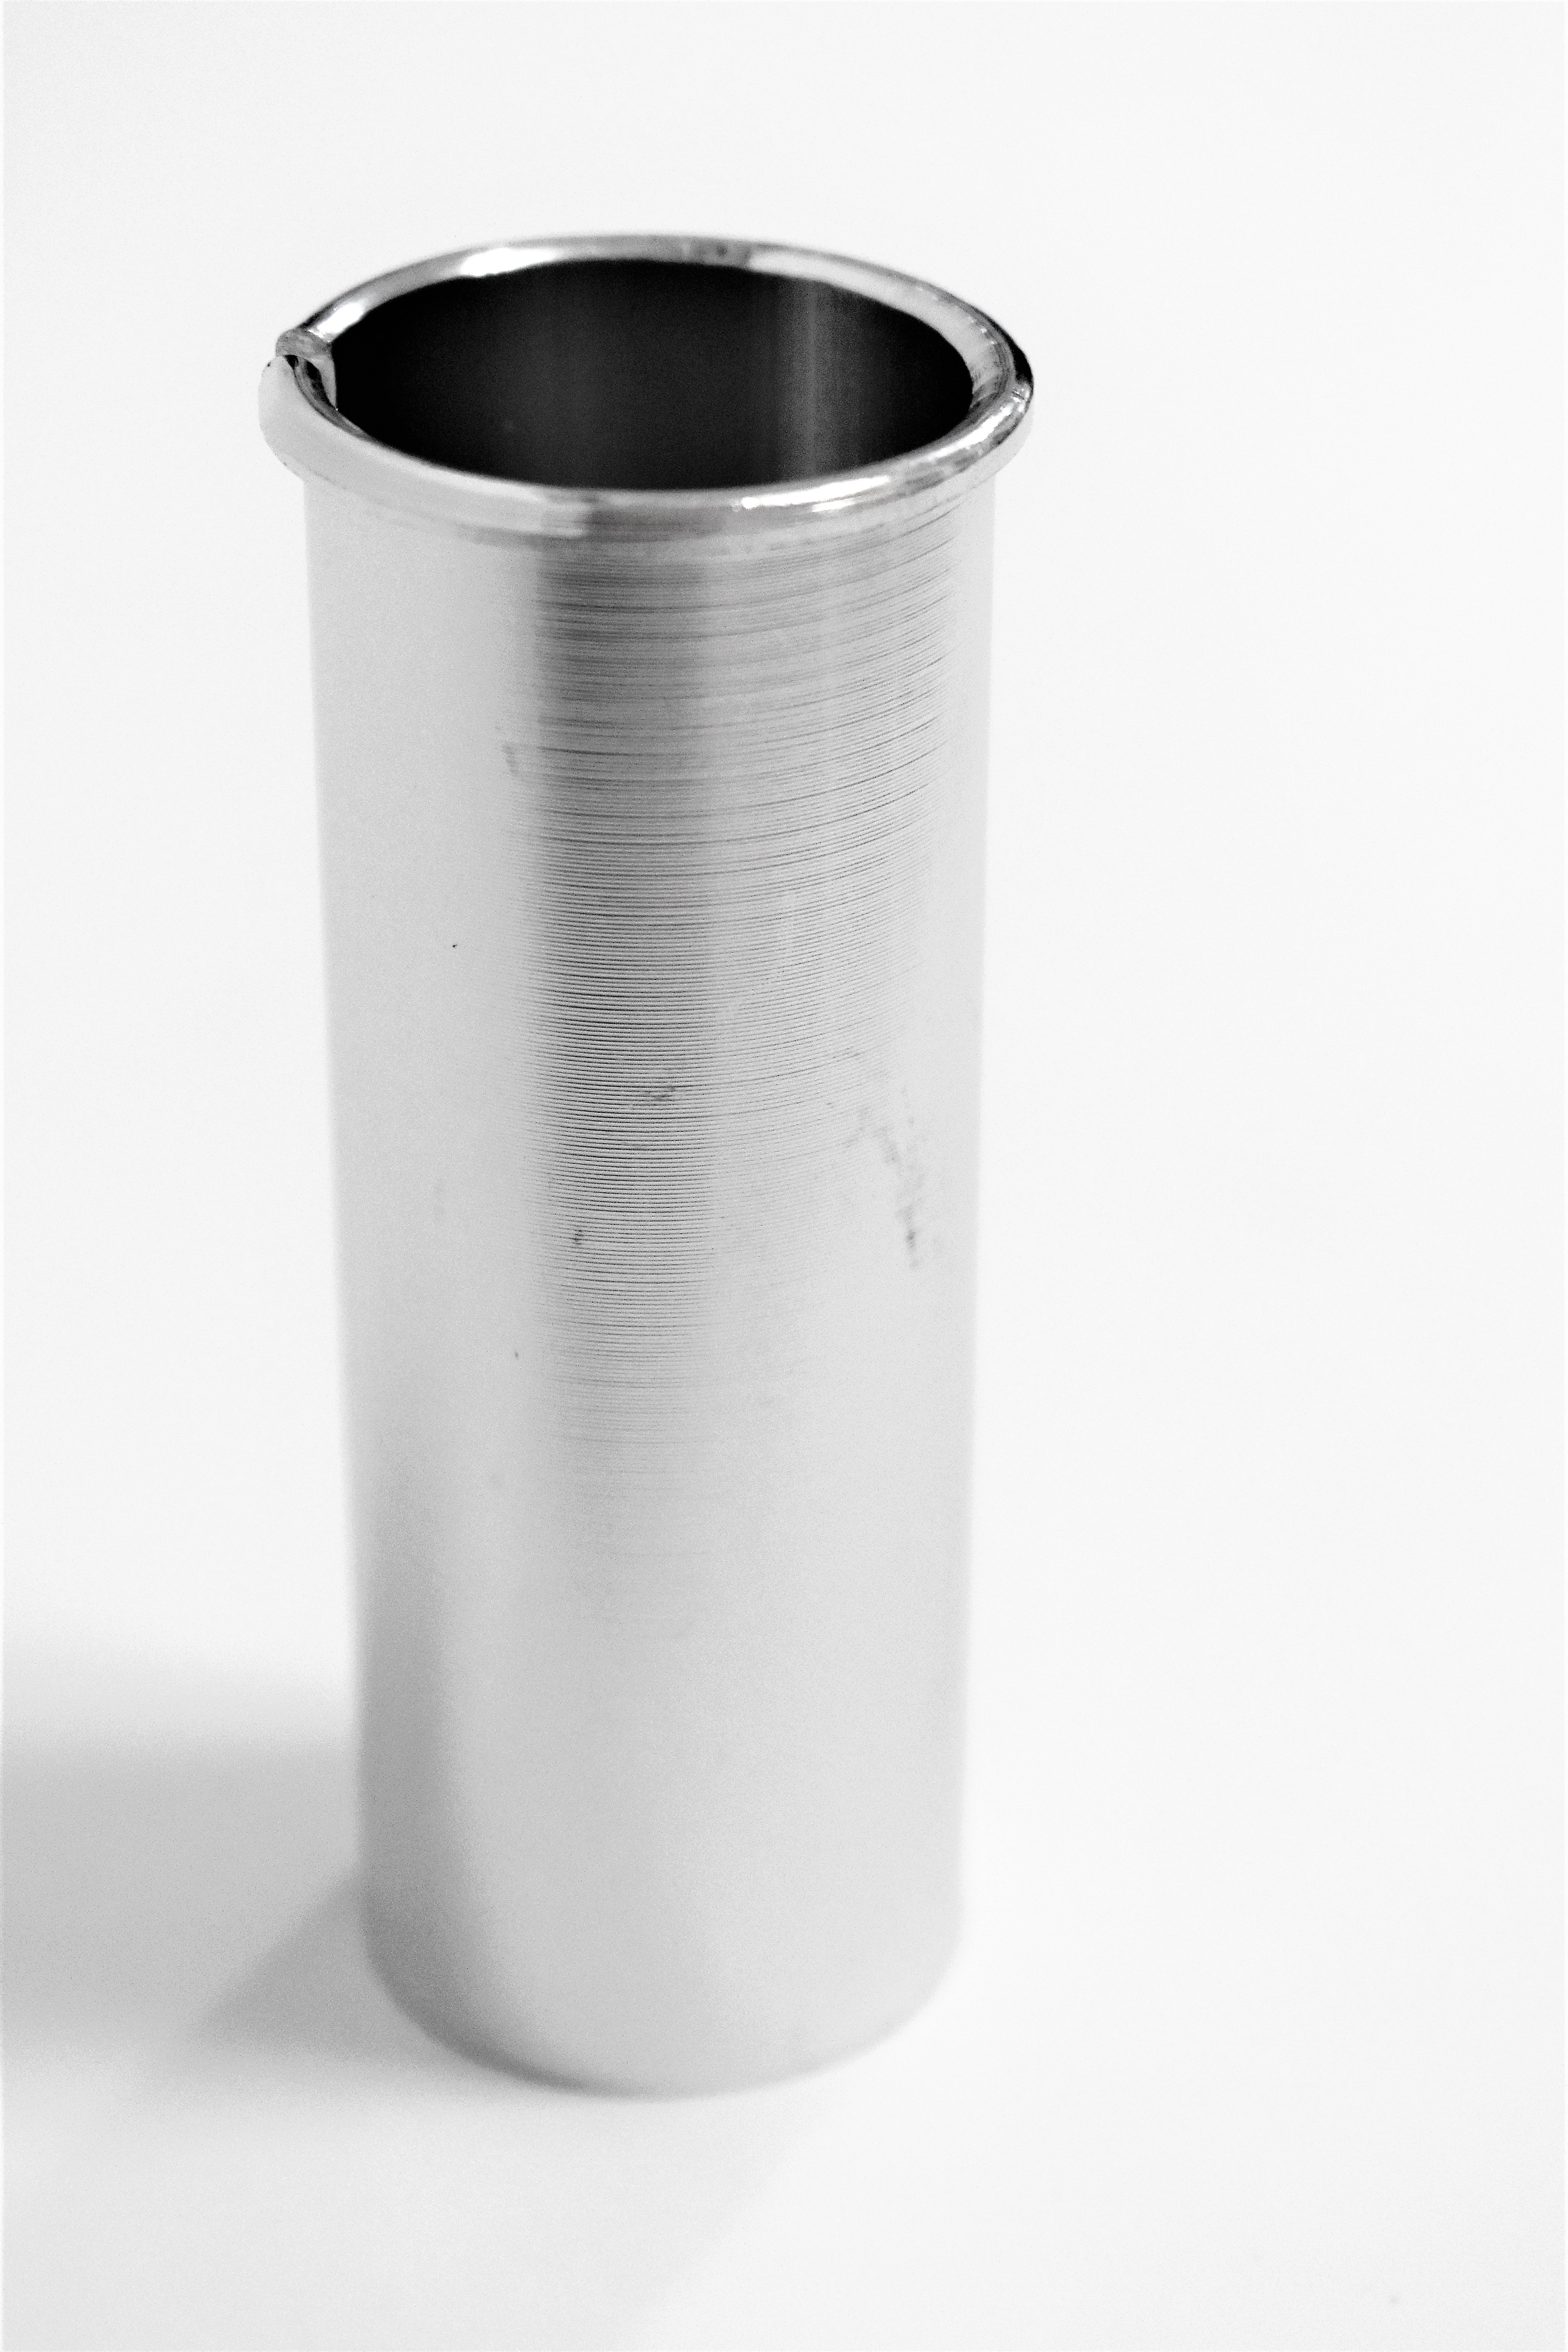 Bucha redutora para canote - alumínio - prata 29,2/ canote 27,2 - 15g